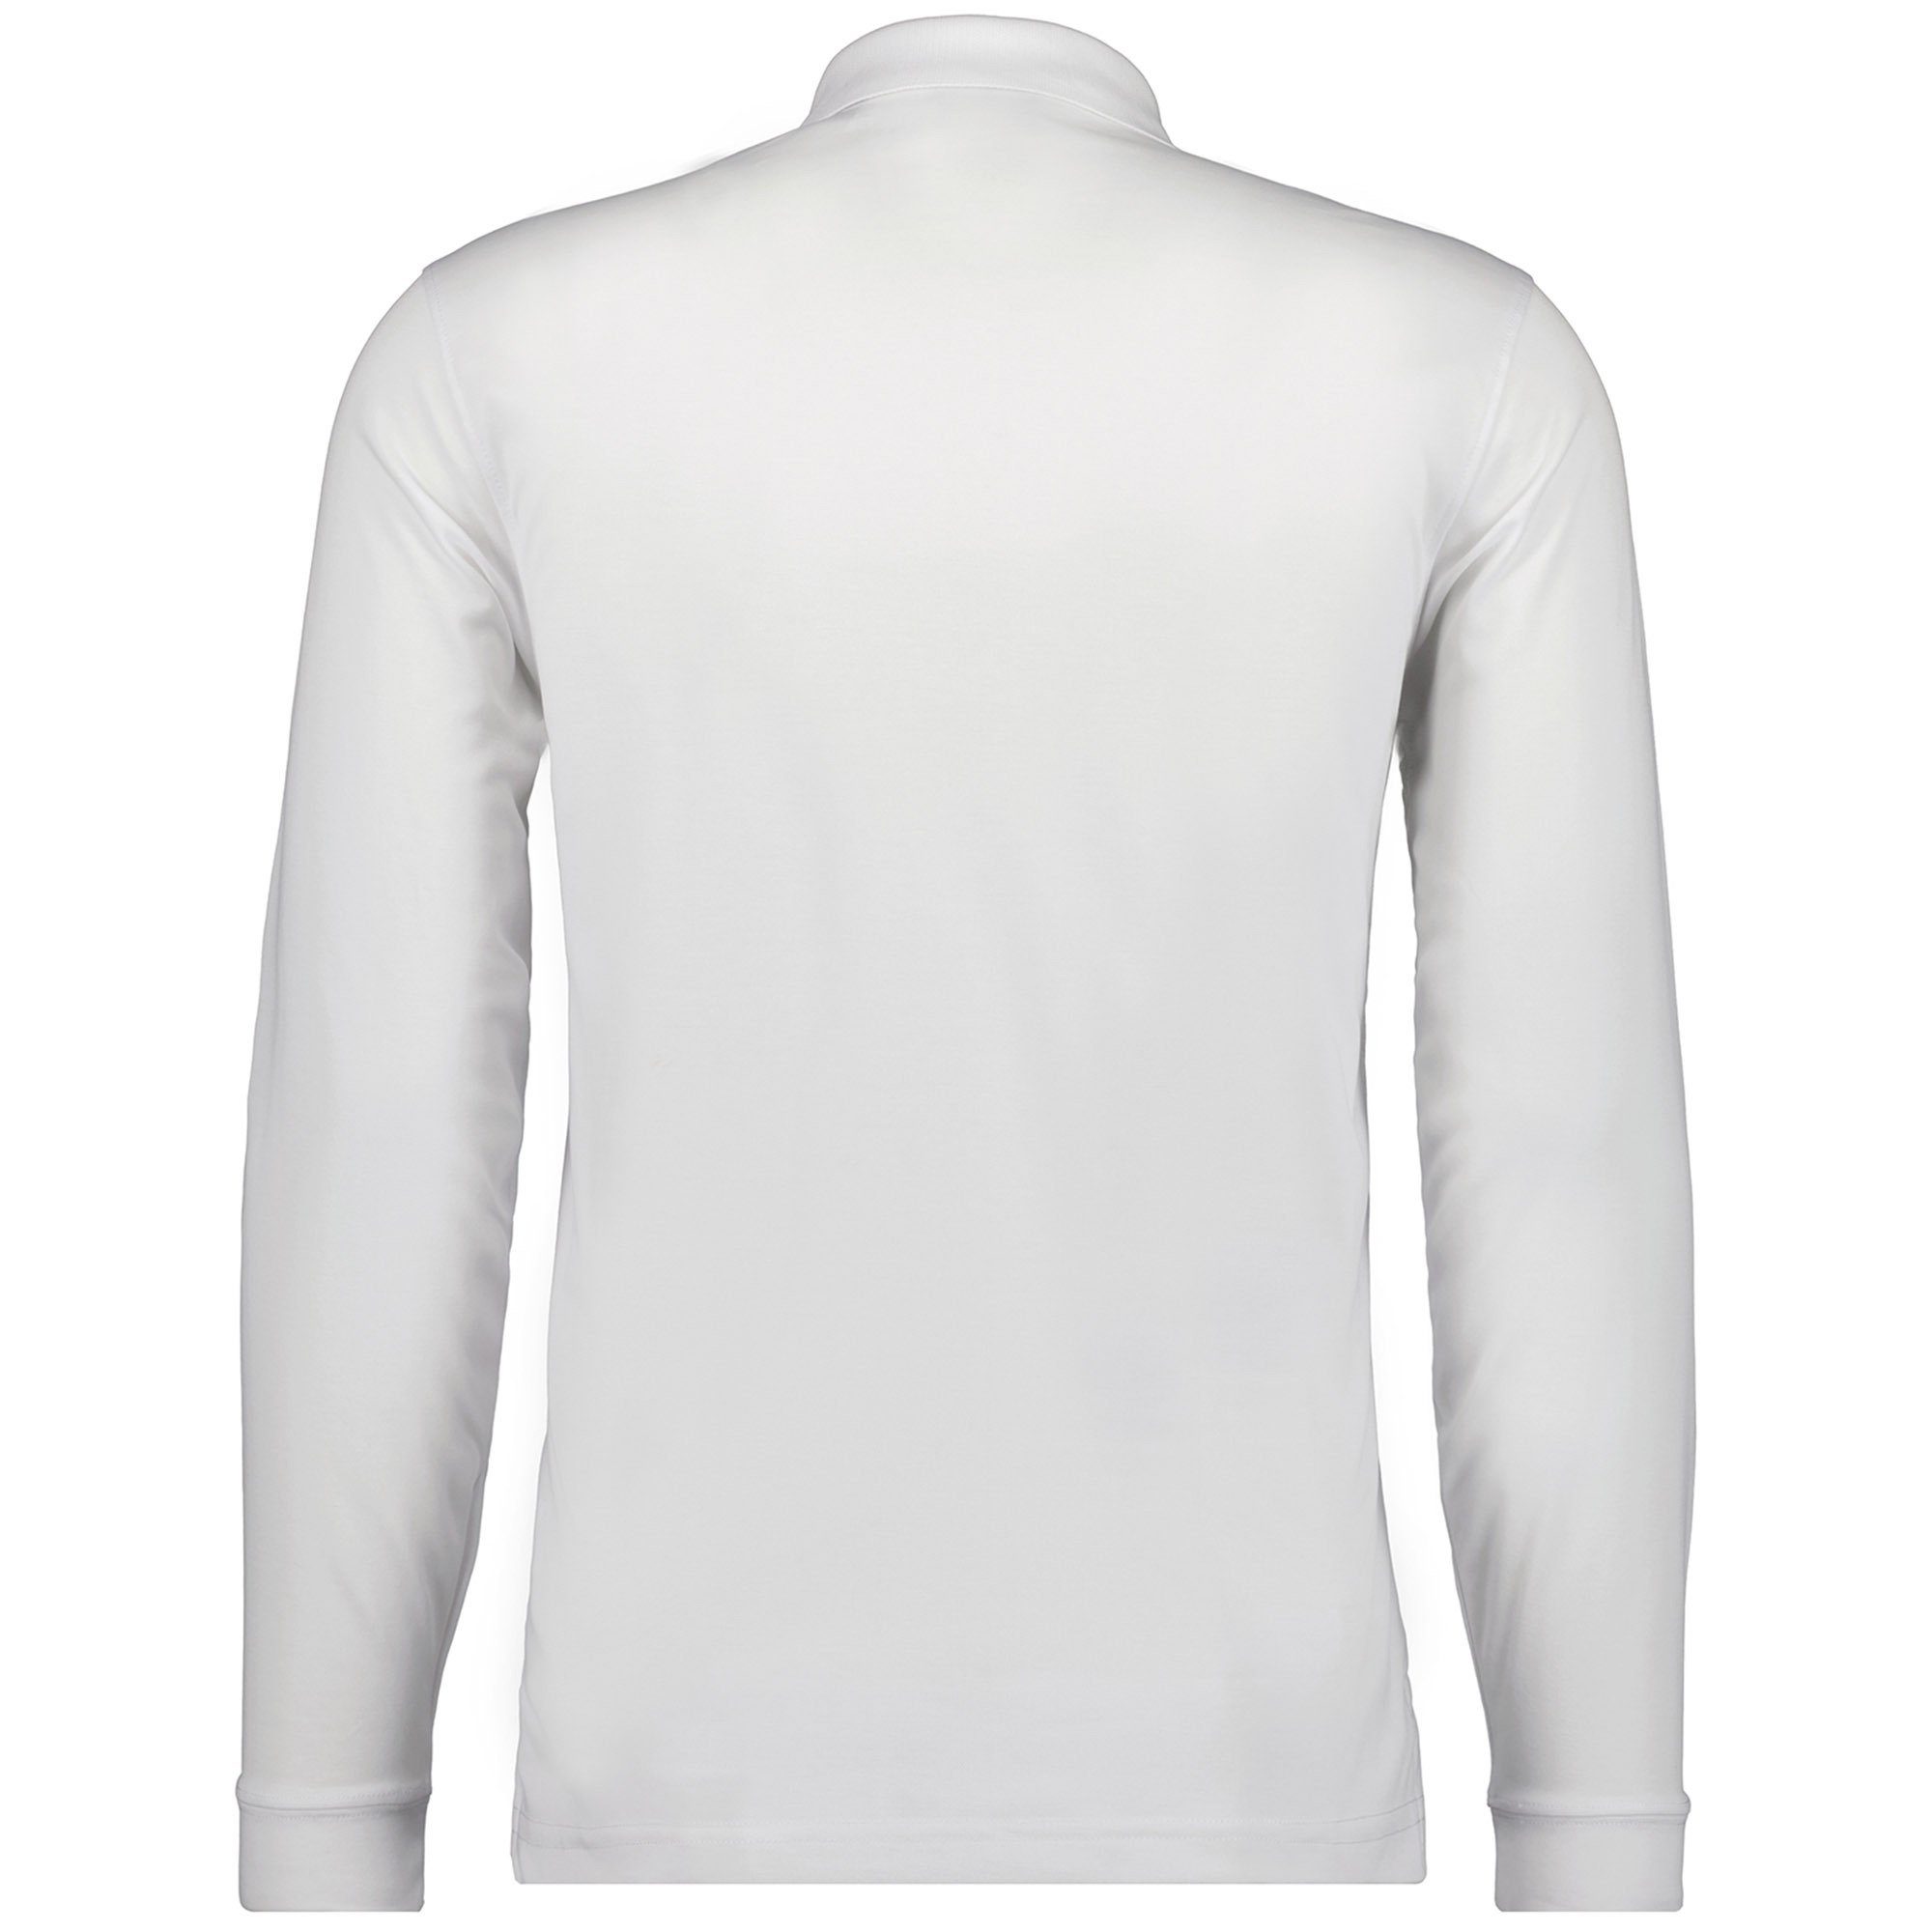 RAGMAN Poloshirt Herren Langarm-Poloshirt Knit Polo Knopf - Soft Weiß